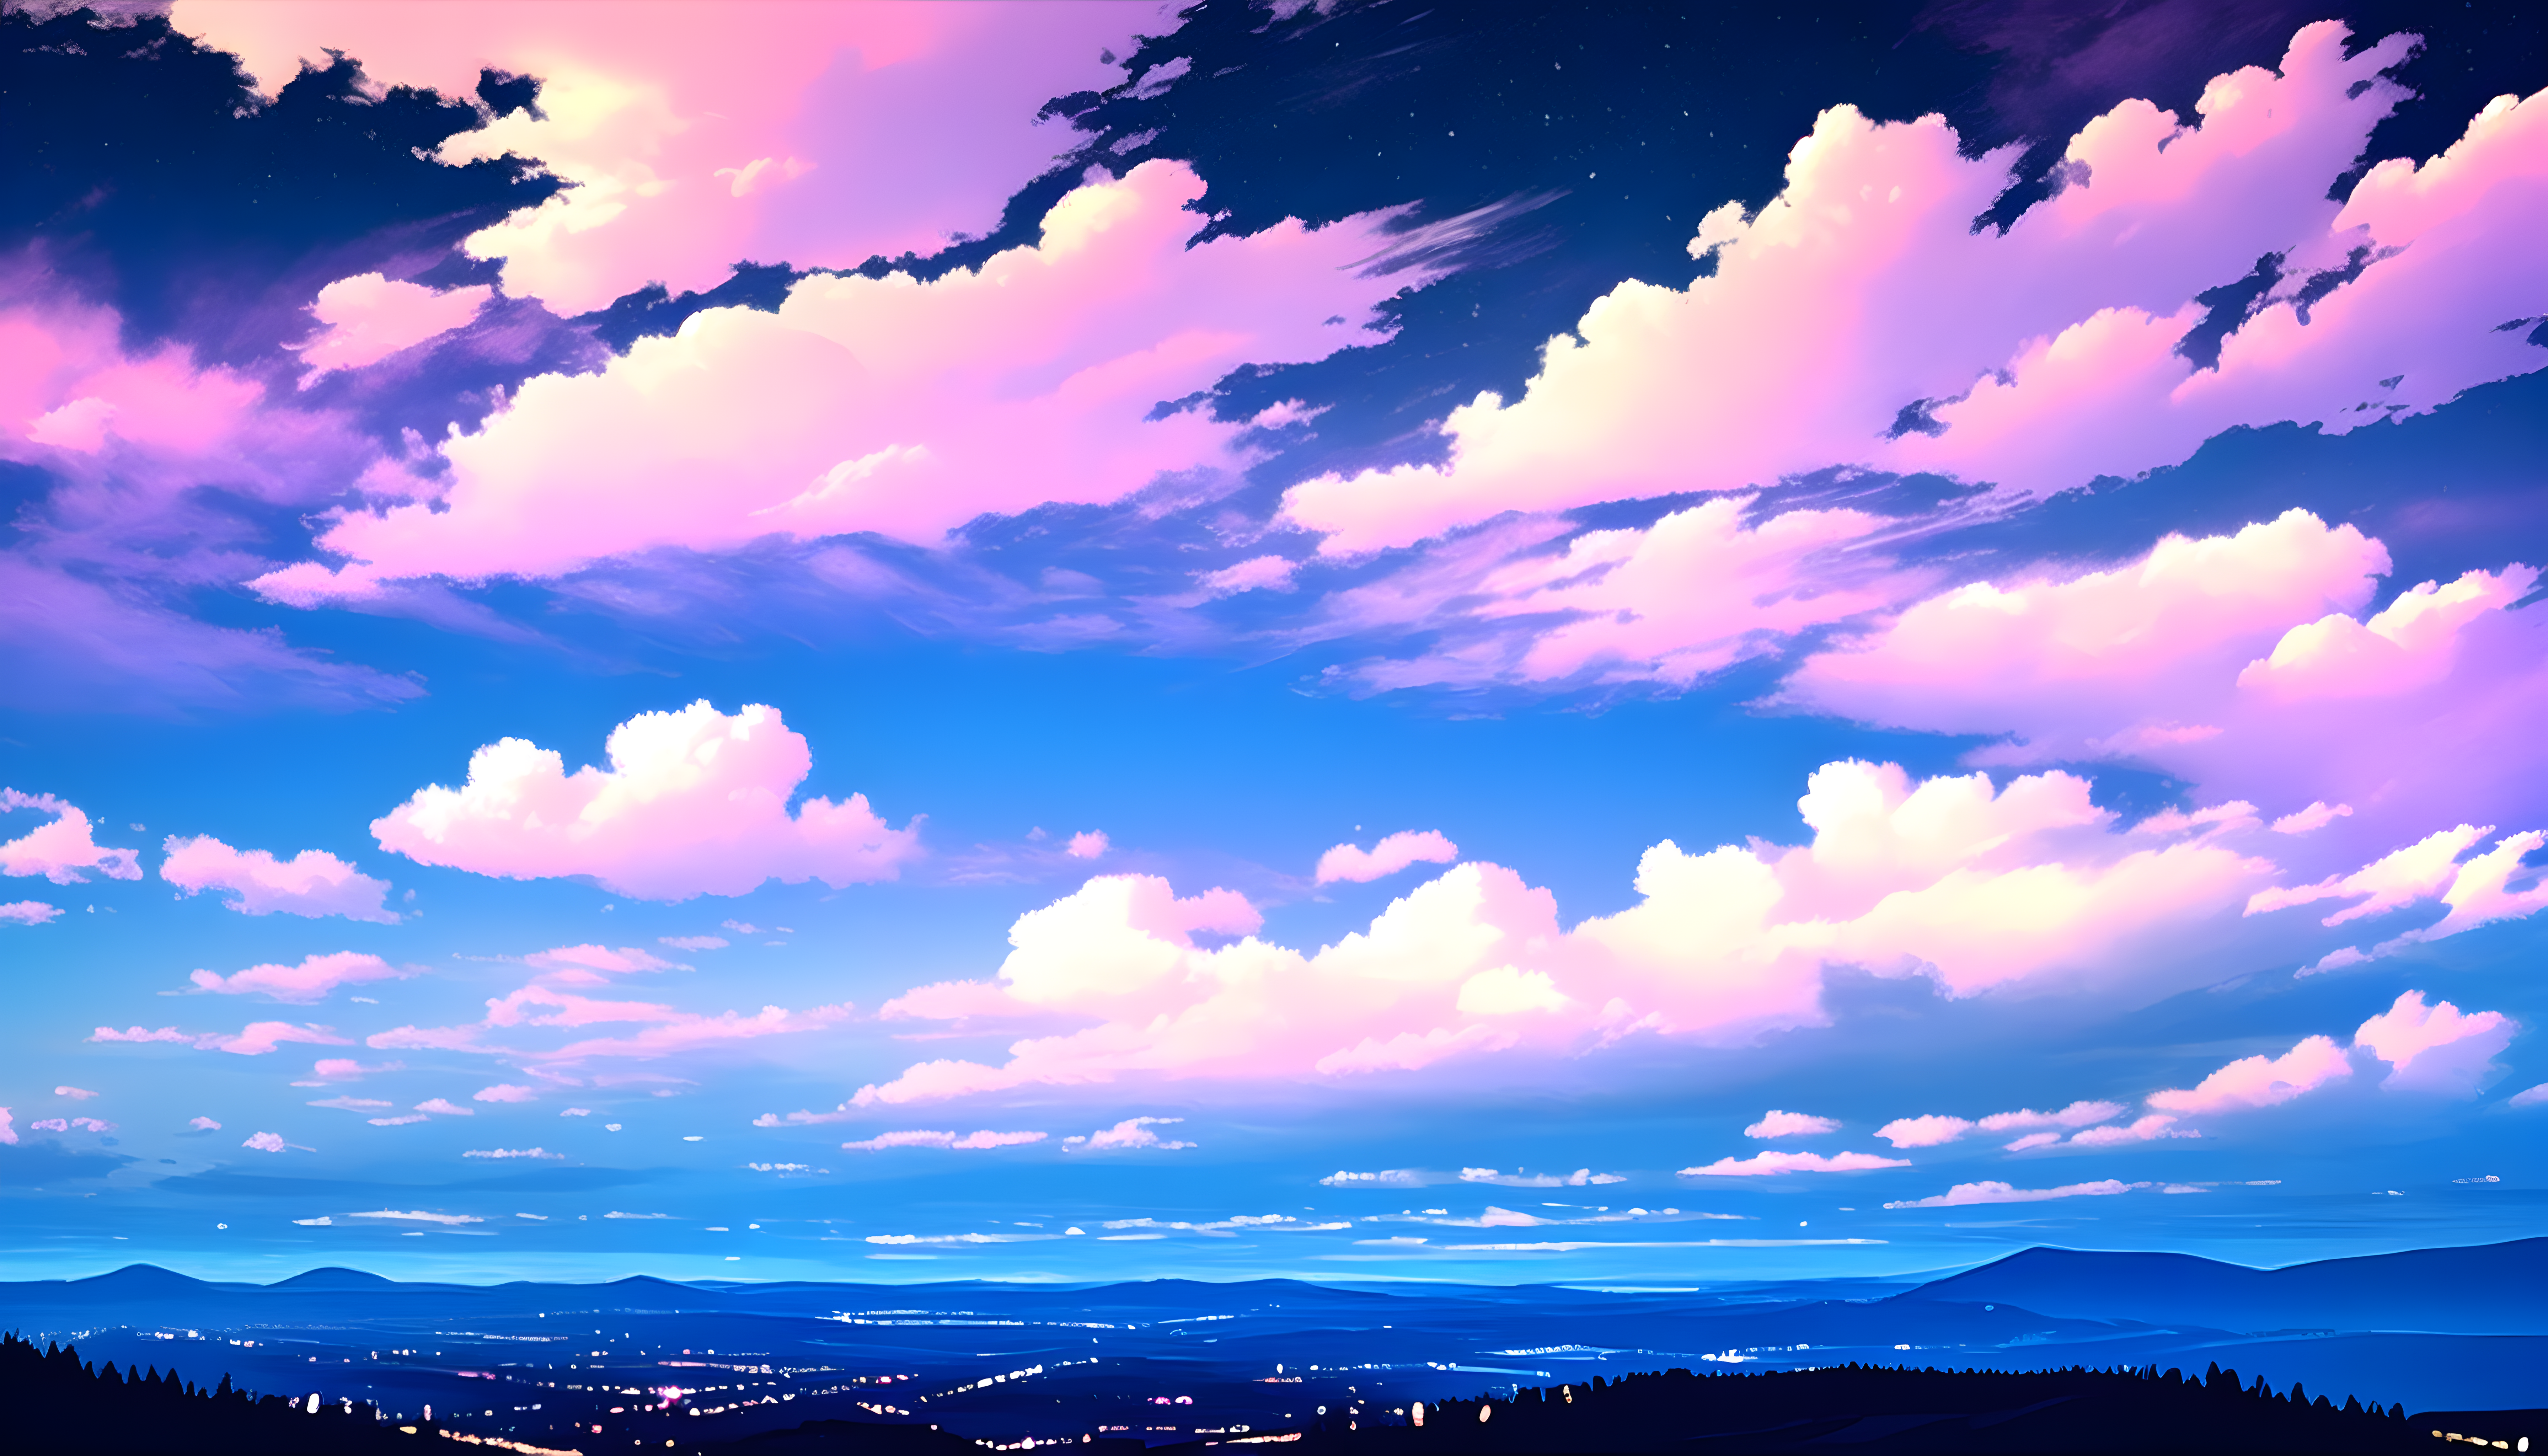 Anime landscape wallpaper by thewaifuu  Download on ZEDGE  4c37